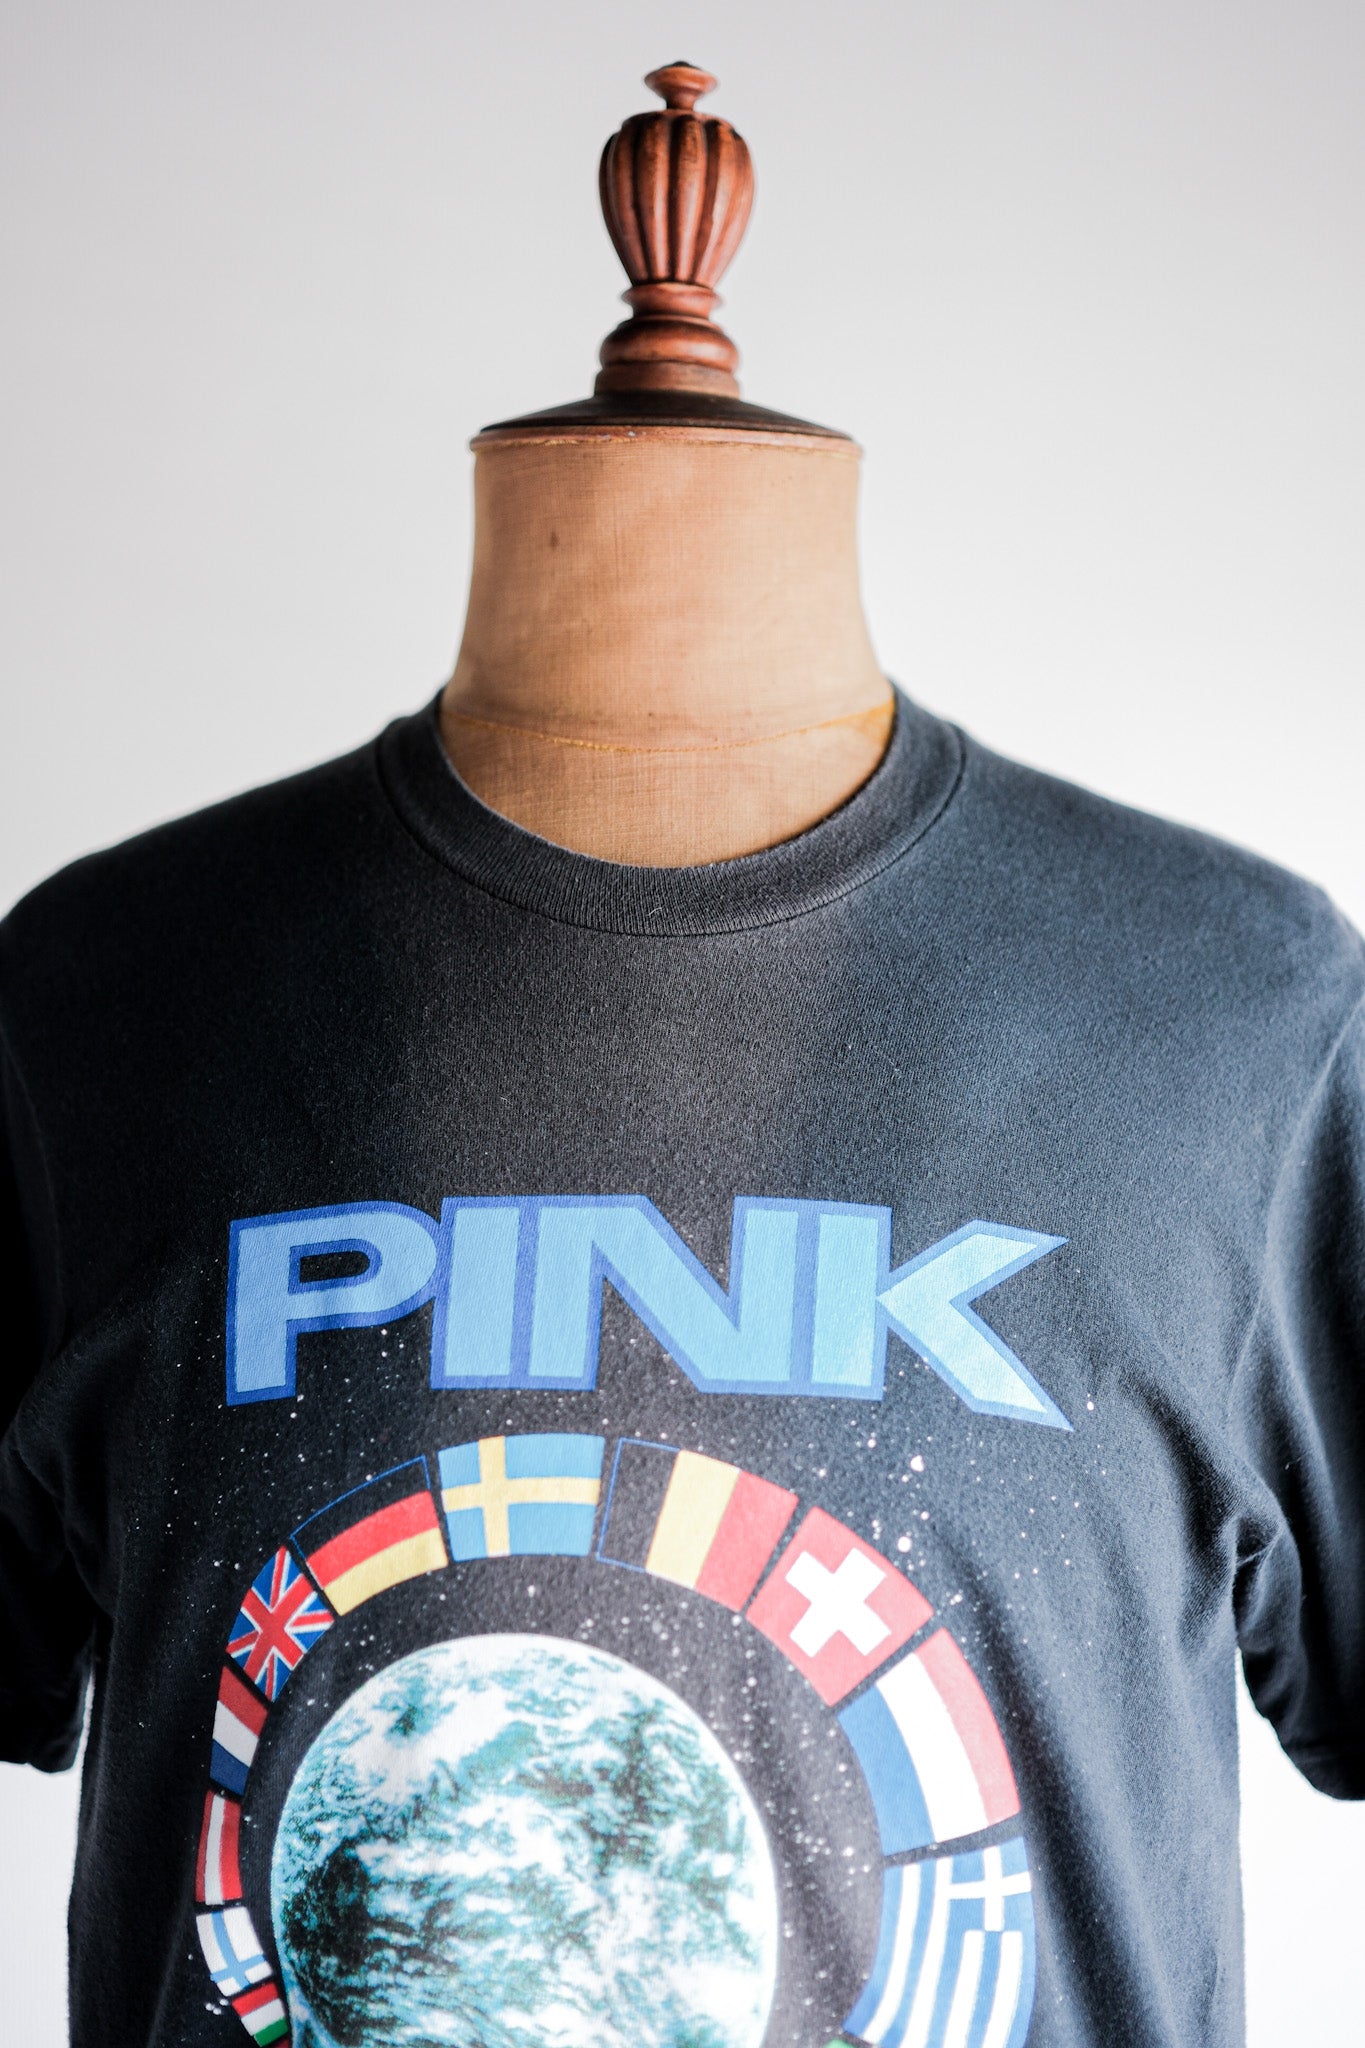 [~ 90's] Vintage Music Print T-Shirt "Pink Floyd"